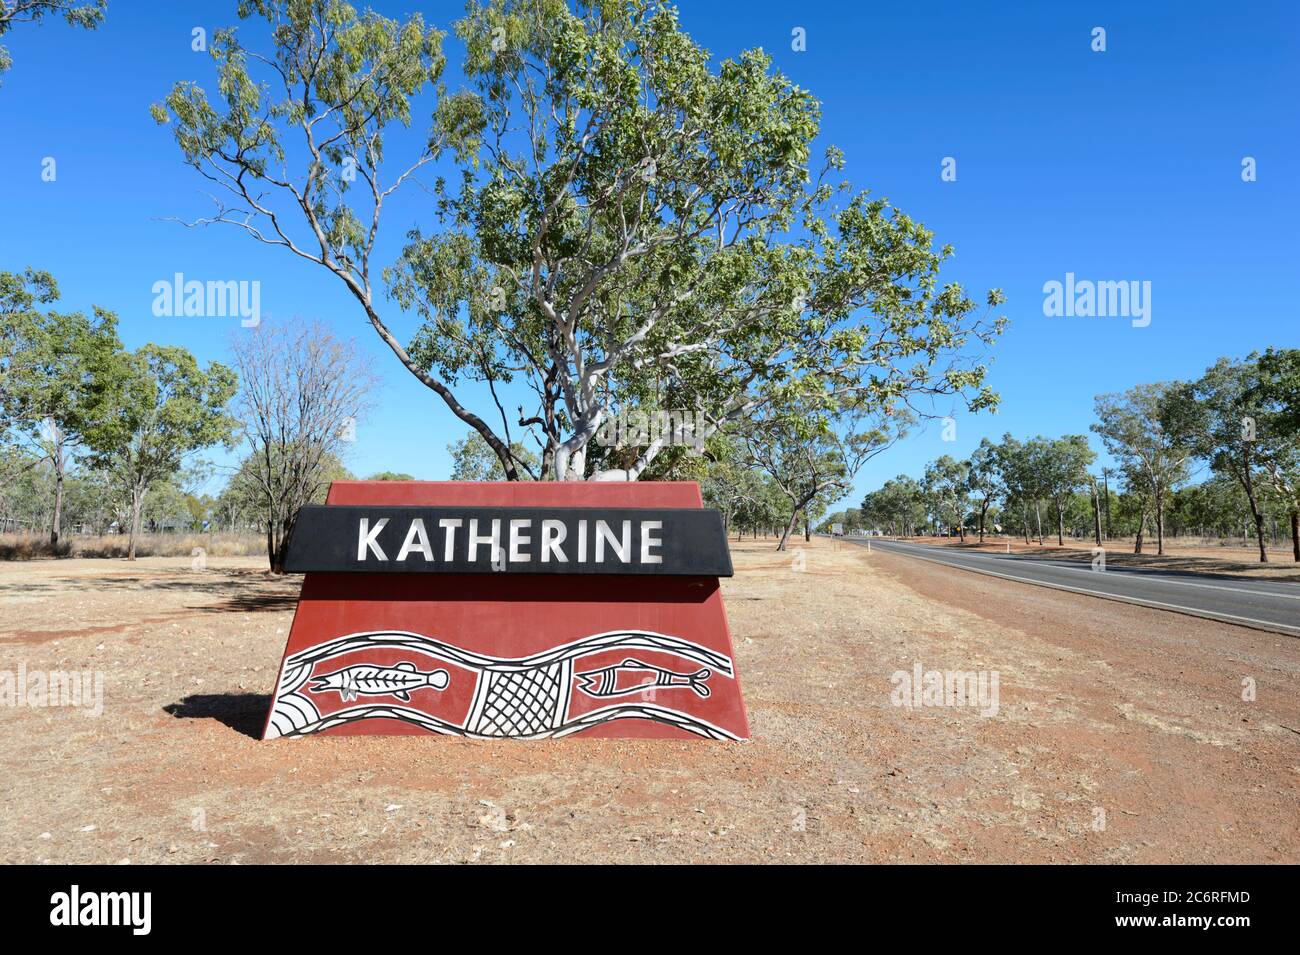 Katherine name sign with Aboriginal art ornament, Katherine, Northern Territory, NT, Australia Stock Photo